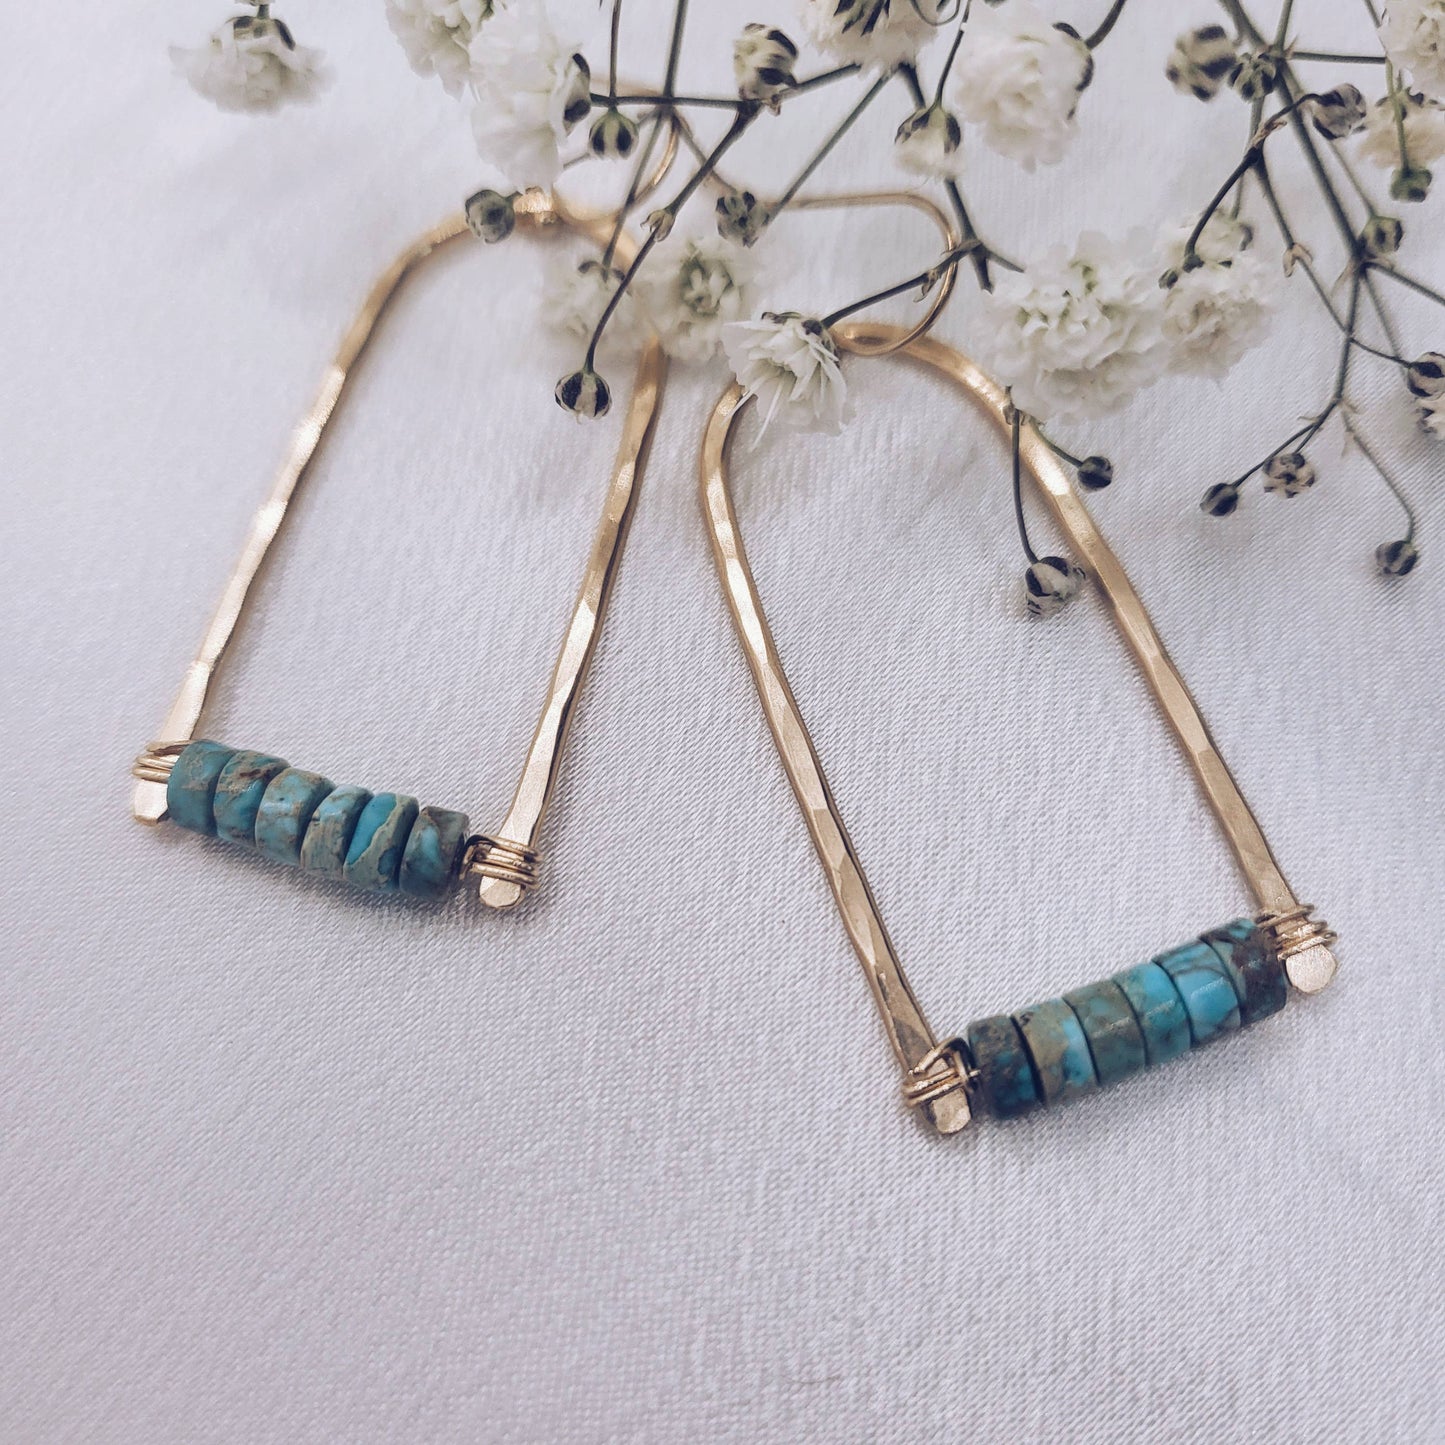 Handmade jewelry turquoise earrings